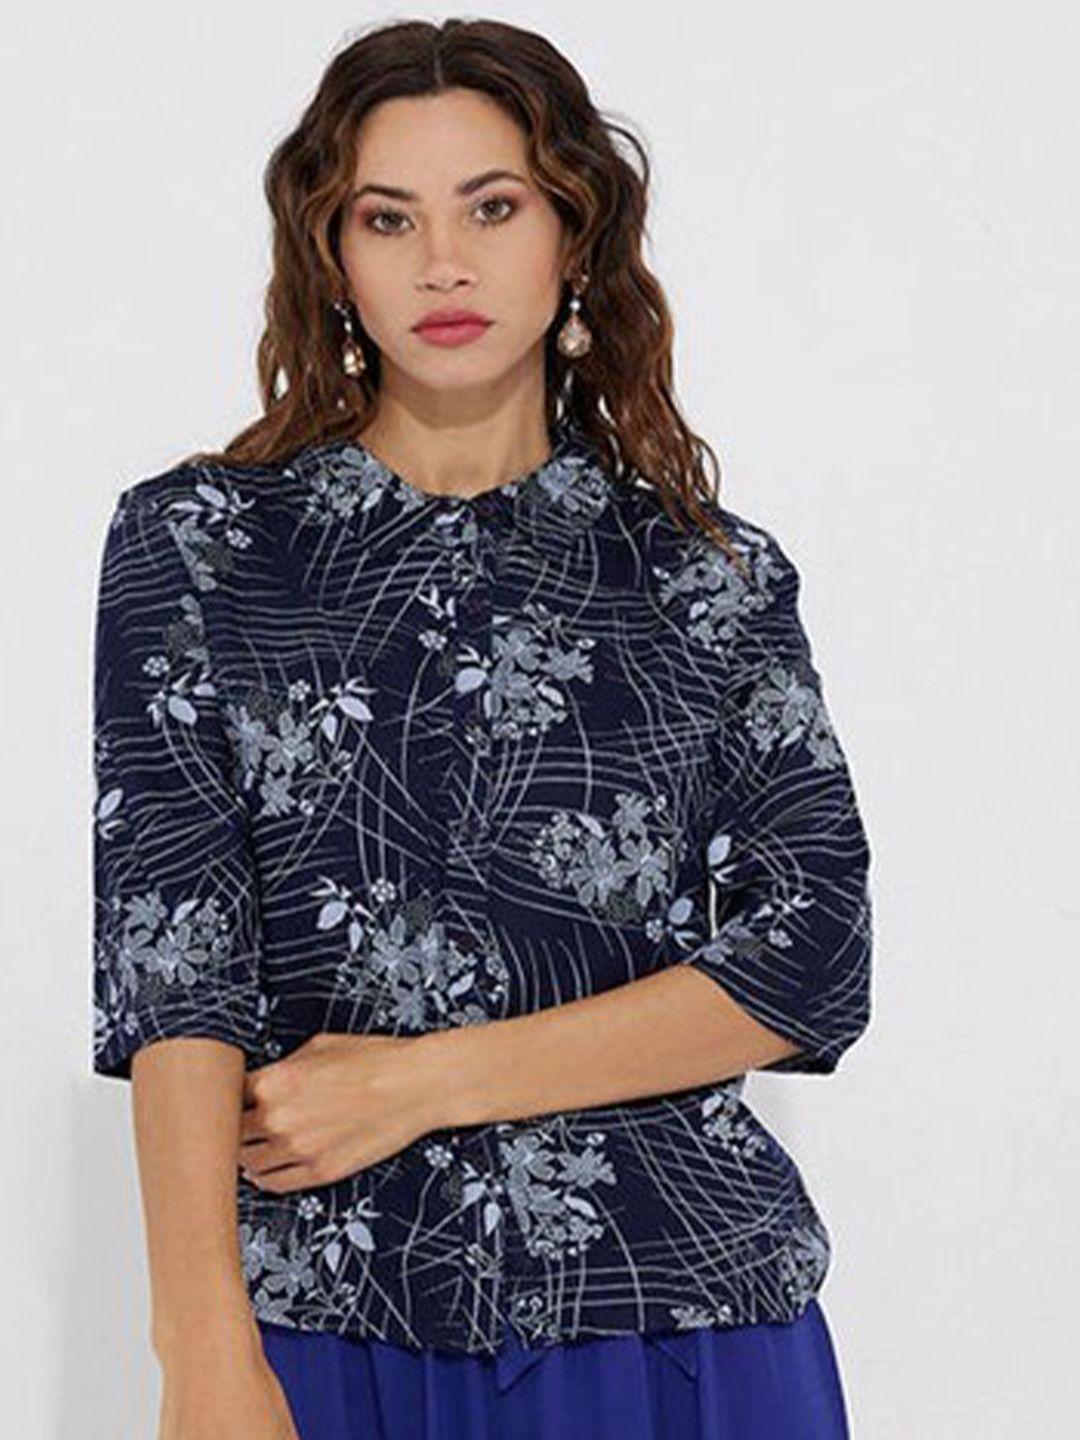 aila floral printed shirt collar cotton shirt style top